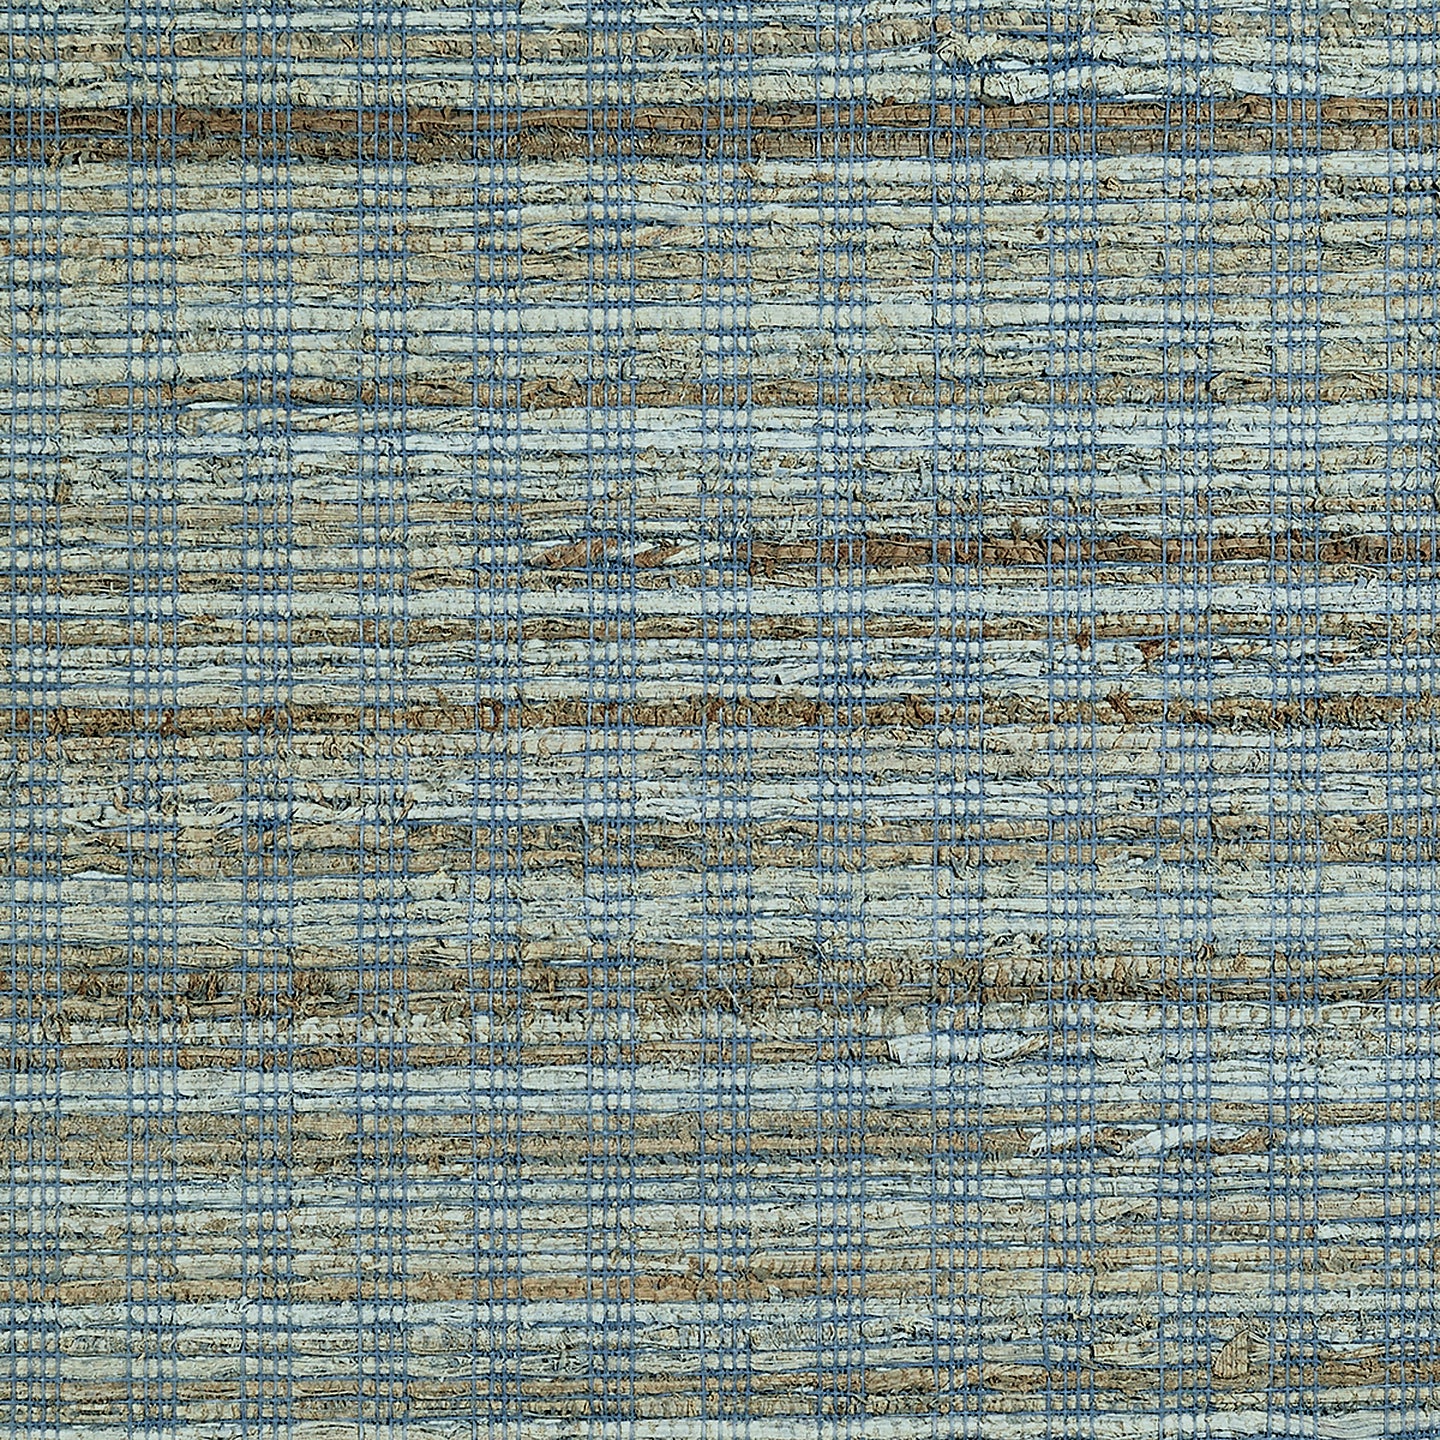 Purchase Phillip Jeffries Wallpaper - 10146, Woven Husk - Mantra Blue 